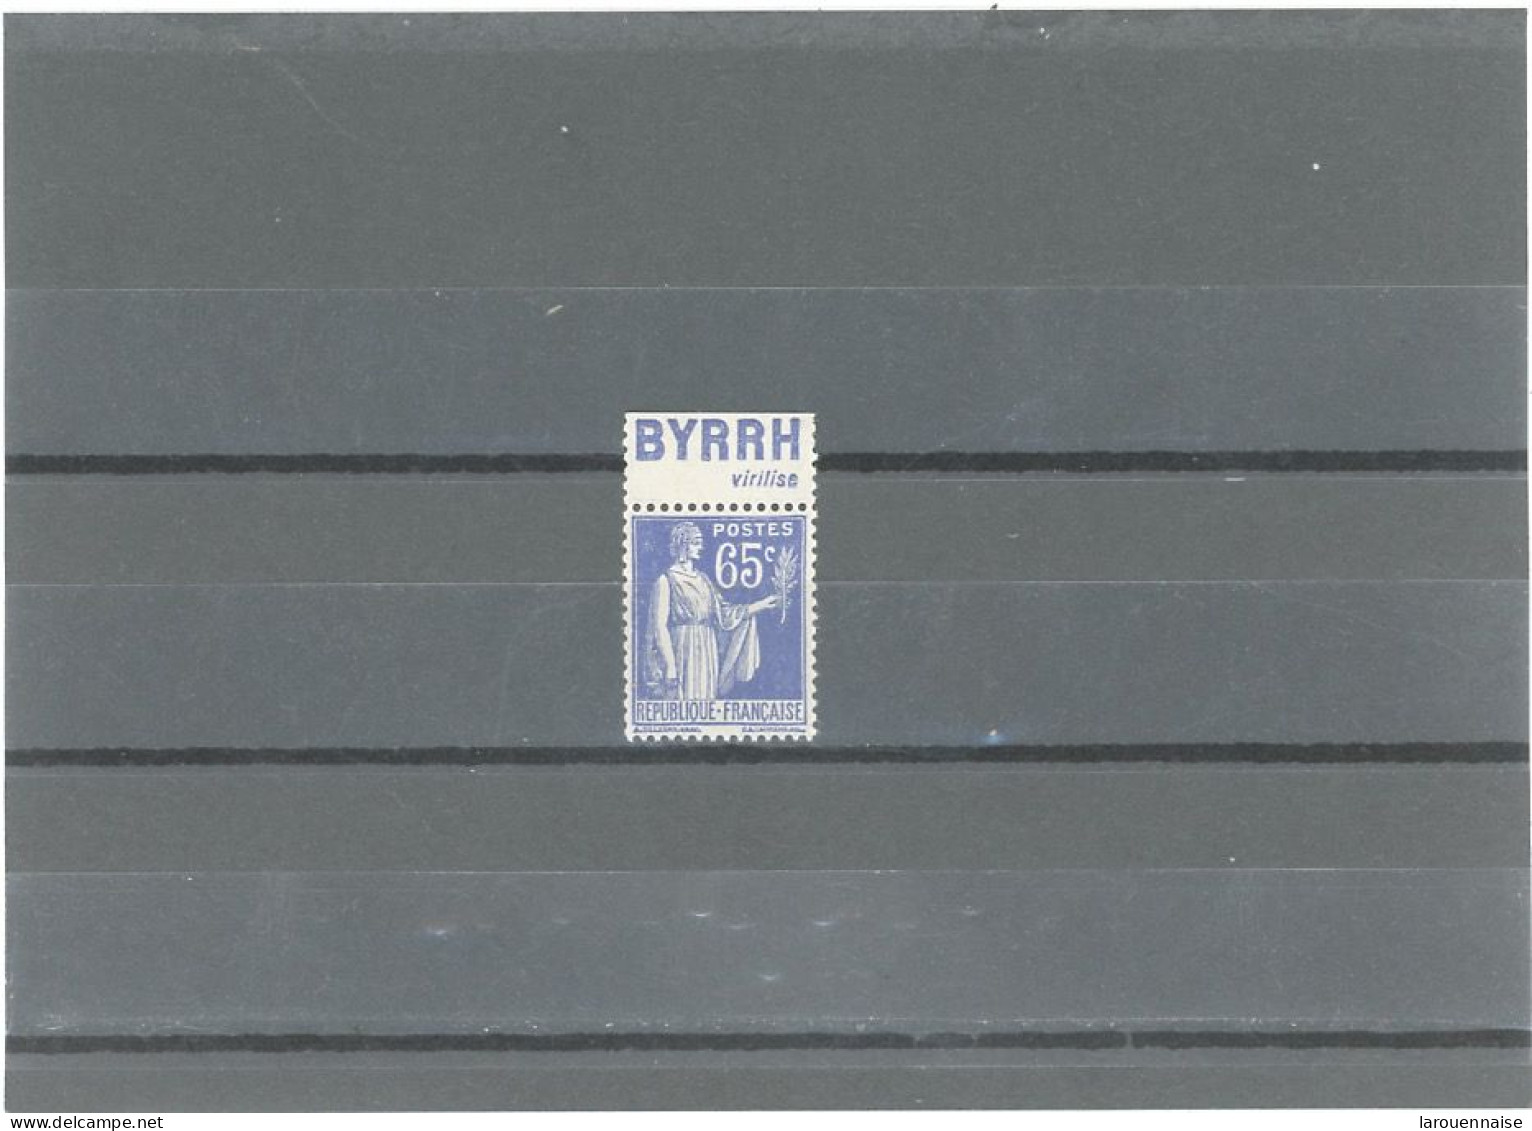 BANDE PUB- N°365 TYPE II -PAIX 65c BLEU - N**- PUB -BYRRH(virilise) -MAURY 243 - Unused Stamps